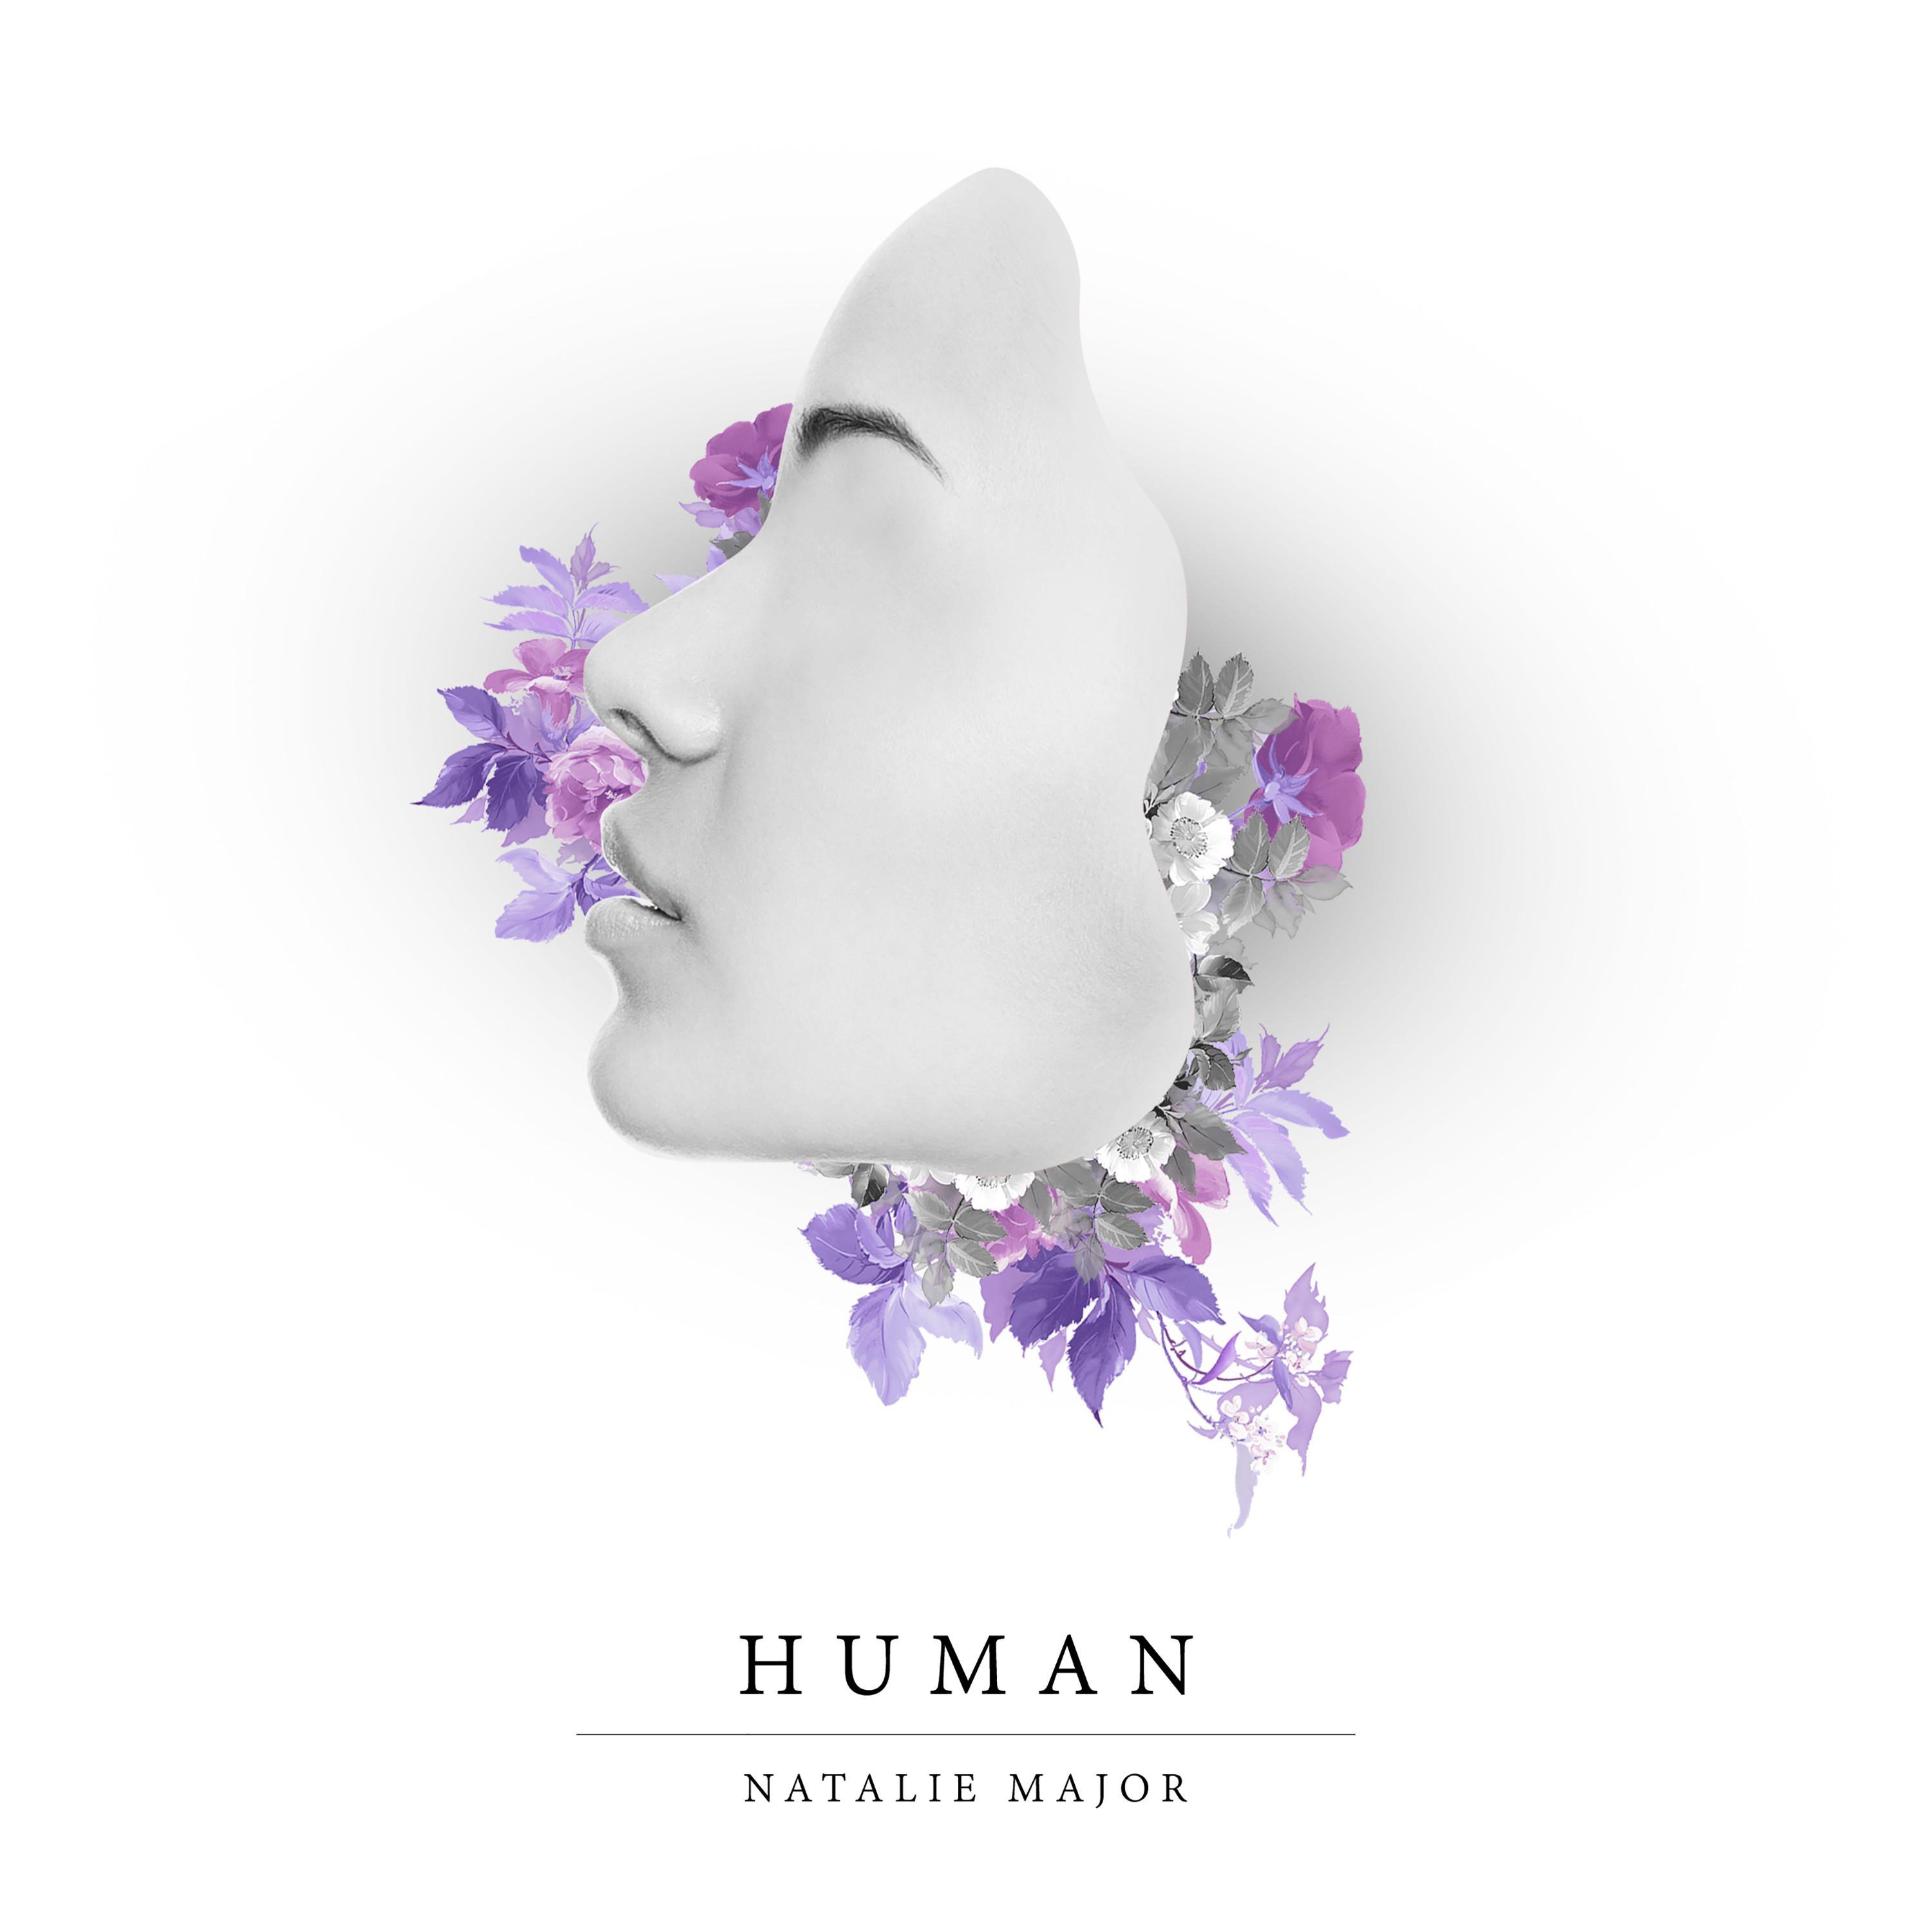 Natalie Major. Натали ХЬЮМАН. Human альбомы. Натали и мейджер. Human remix